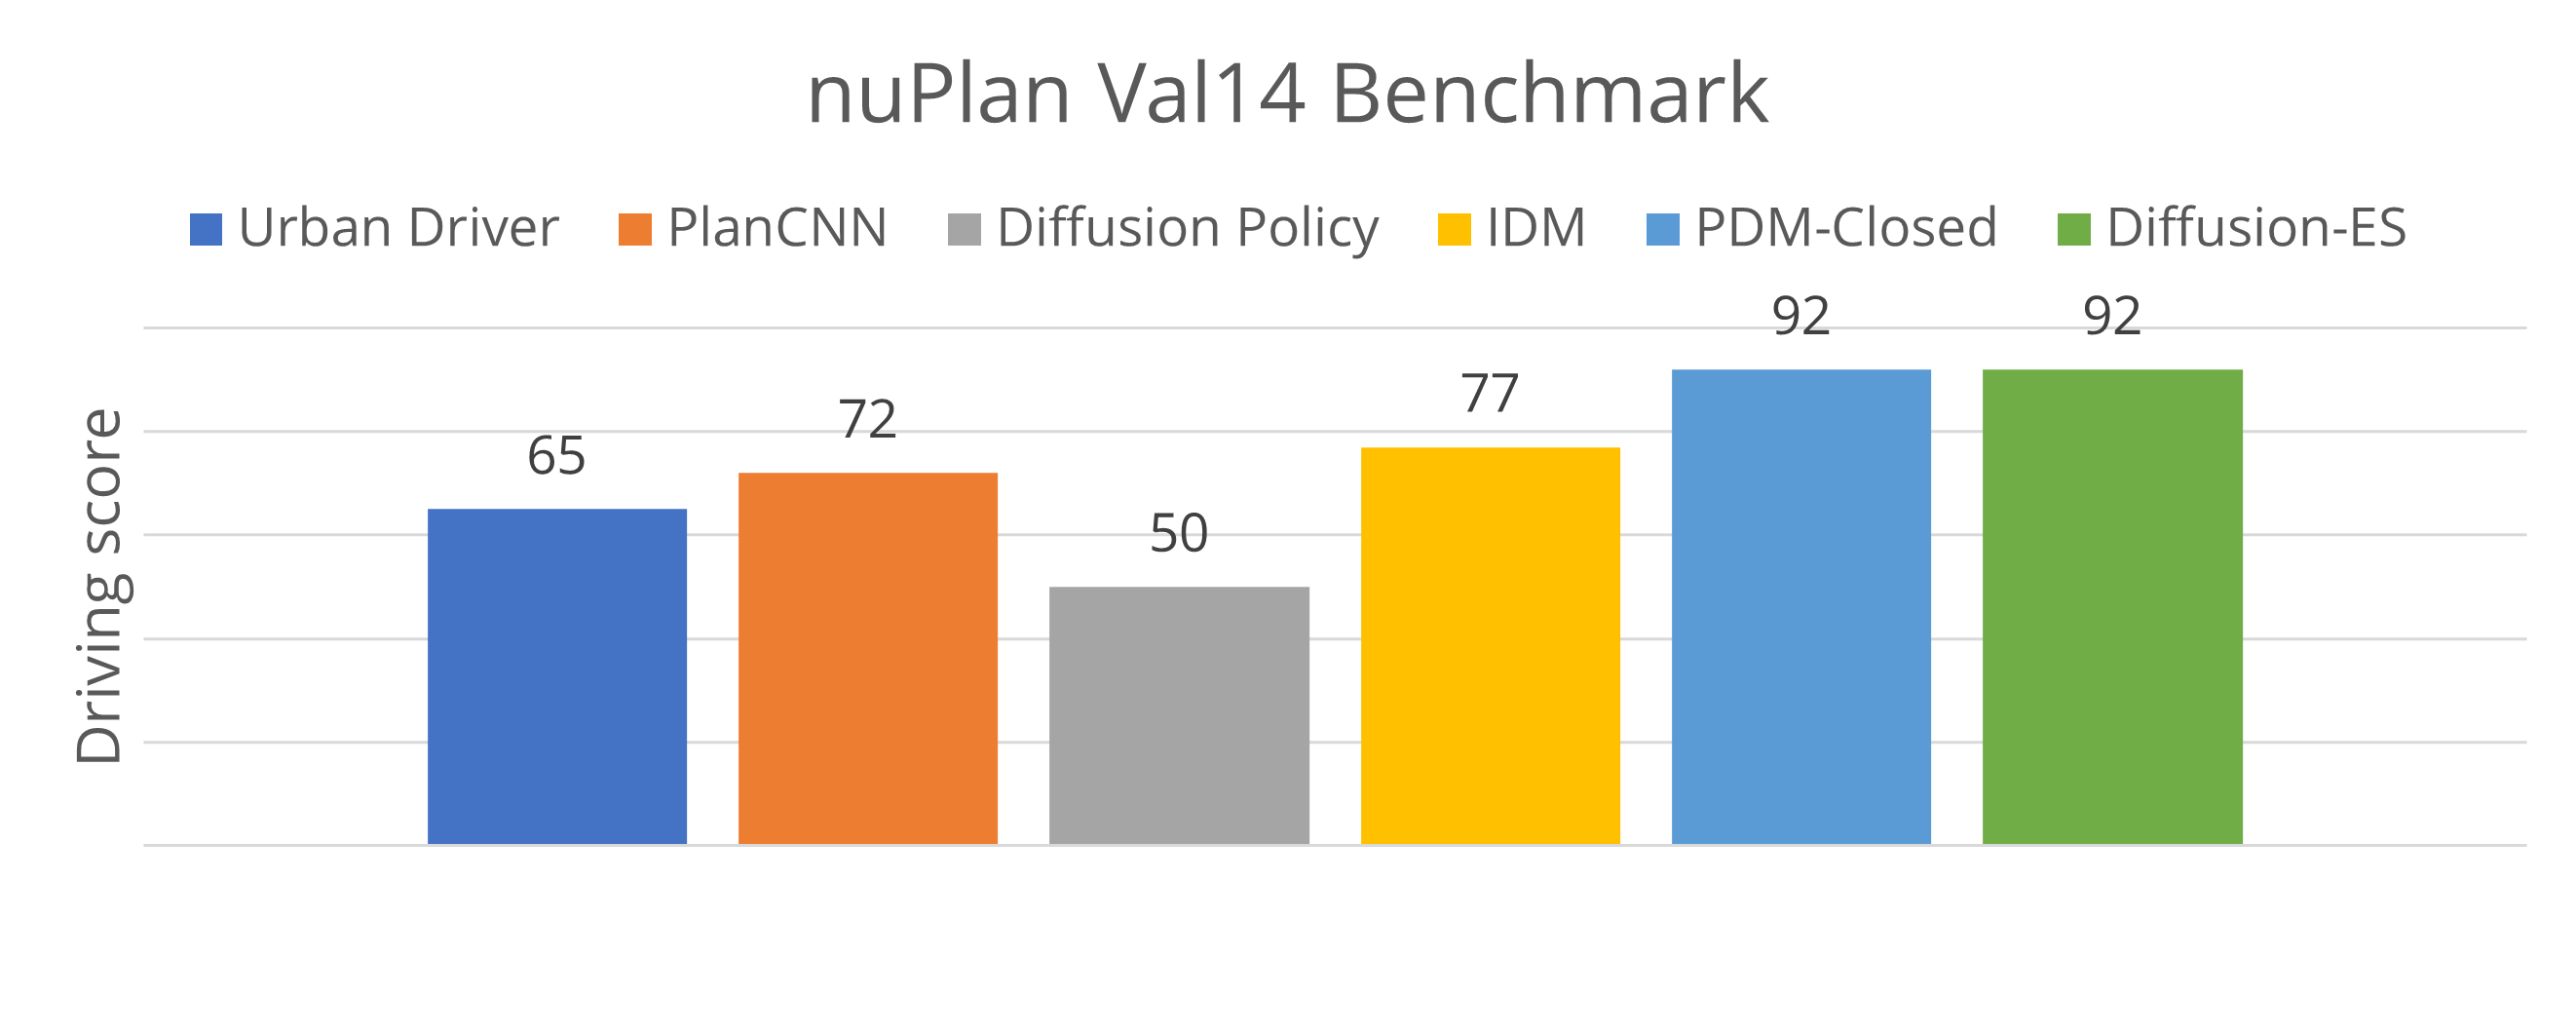 nuPlan benchmark results